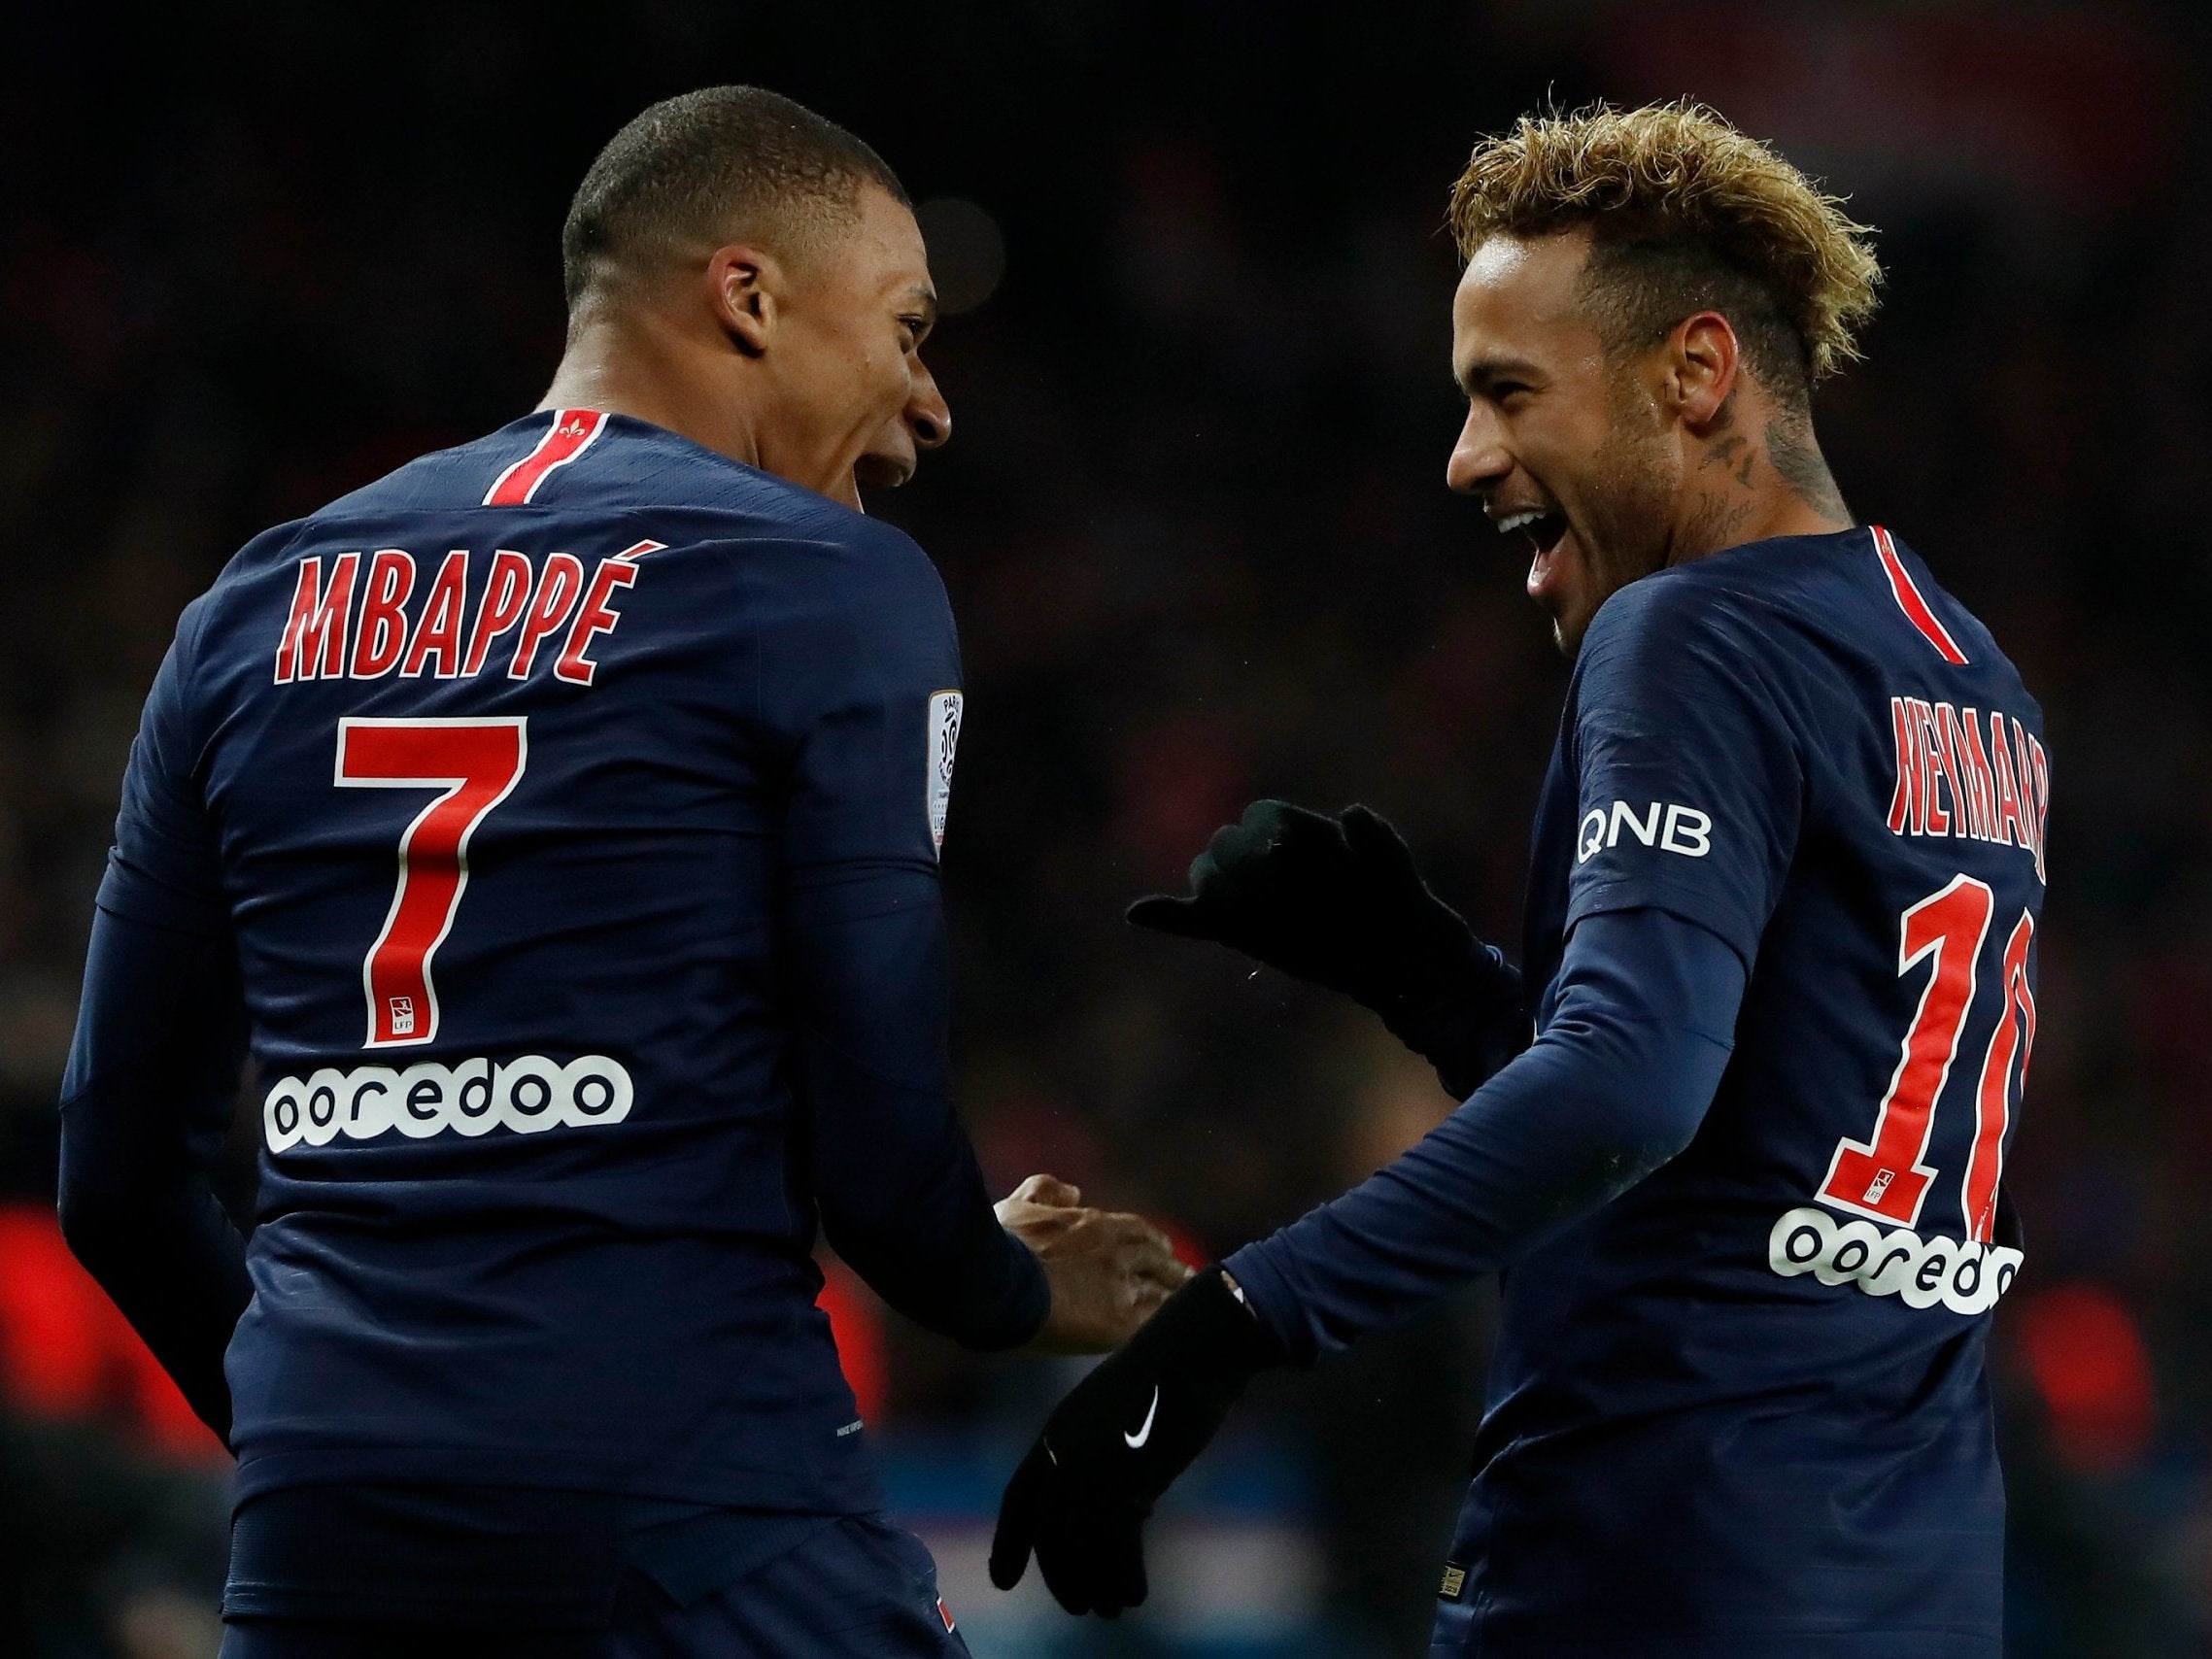 Paris Saint-Germain set European record with 12th consecutive win to start Ligue 1 season2277 x 1708